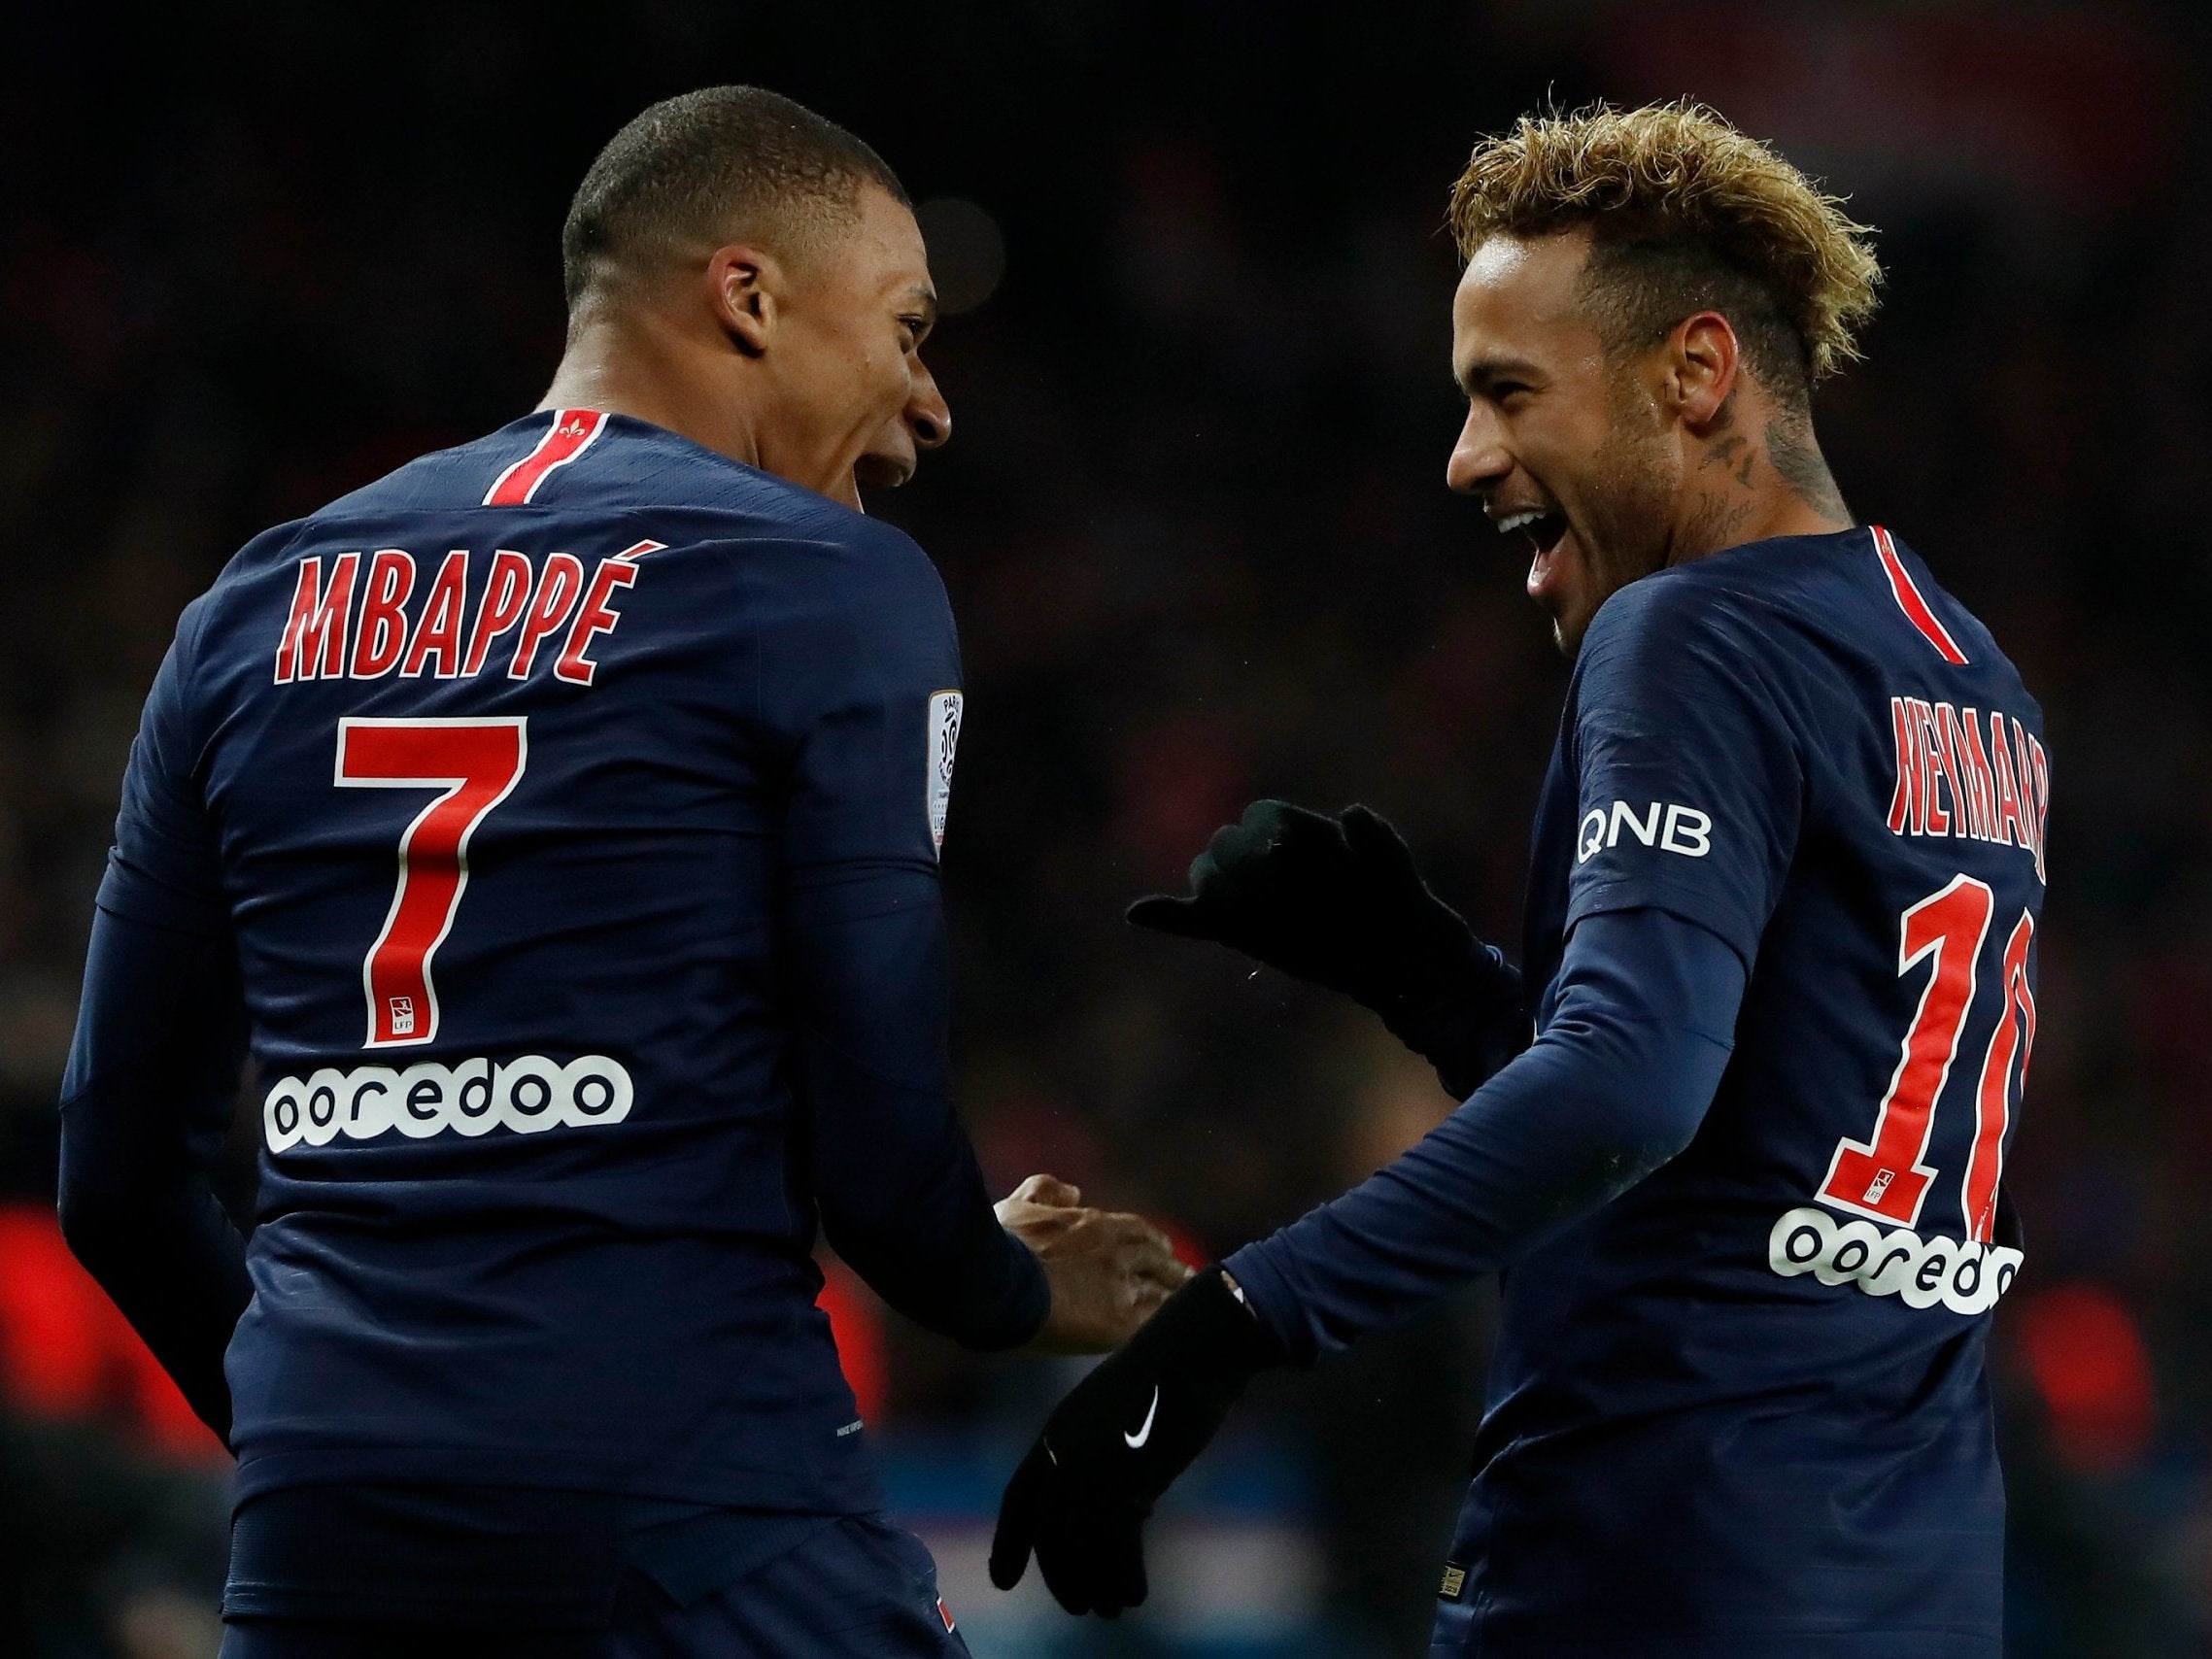 Paris Saint-Germain set European record with 12th consecutive win to start Ligue 1 season2277 x 1708